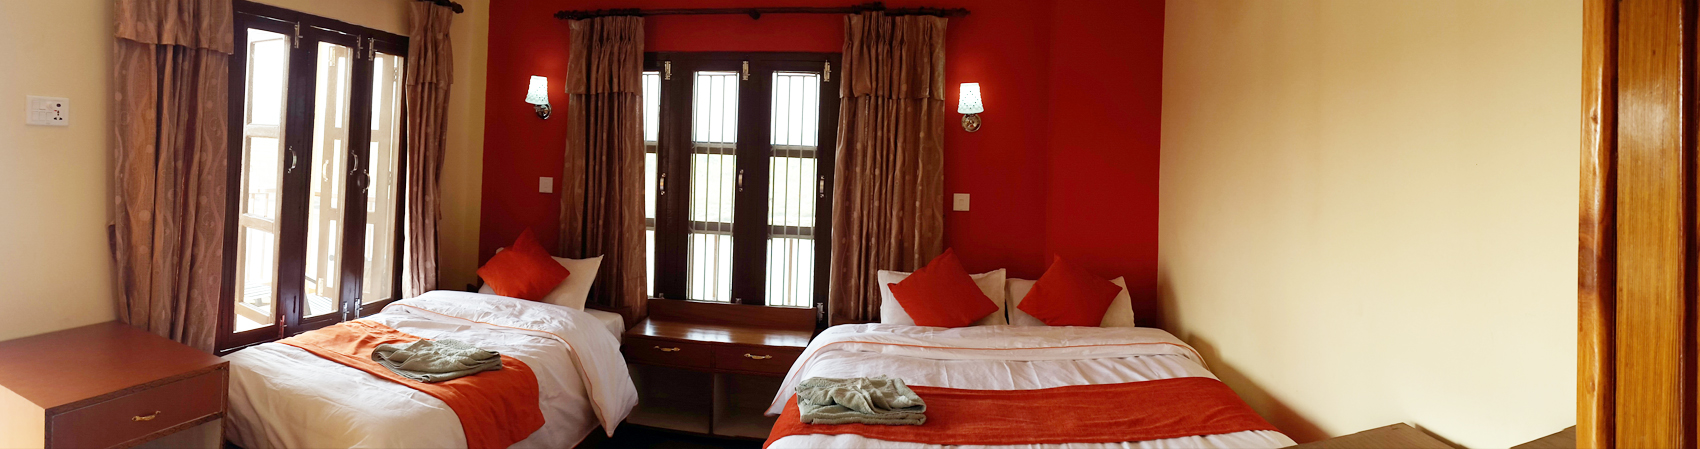 Double Bed Bedroom Chitwan Nepal